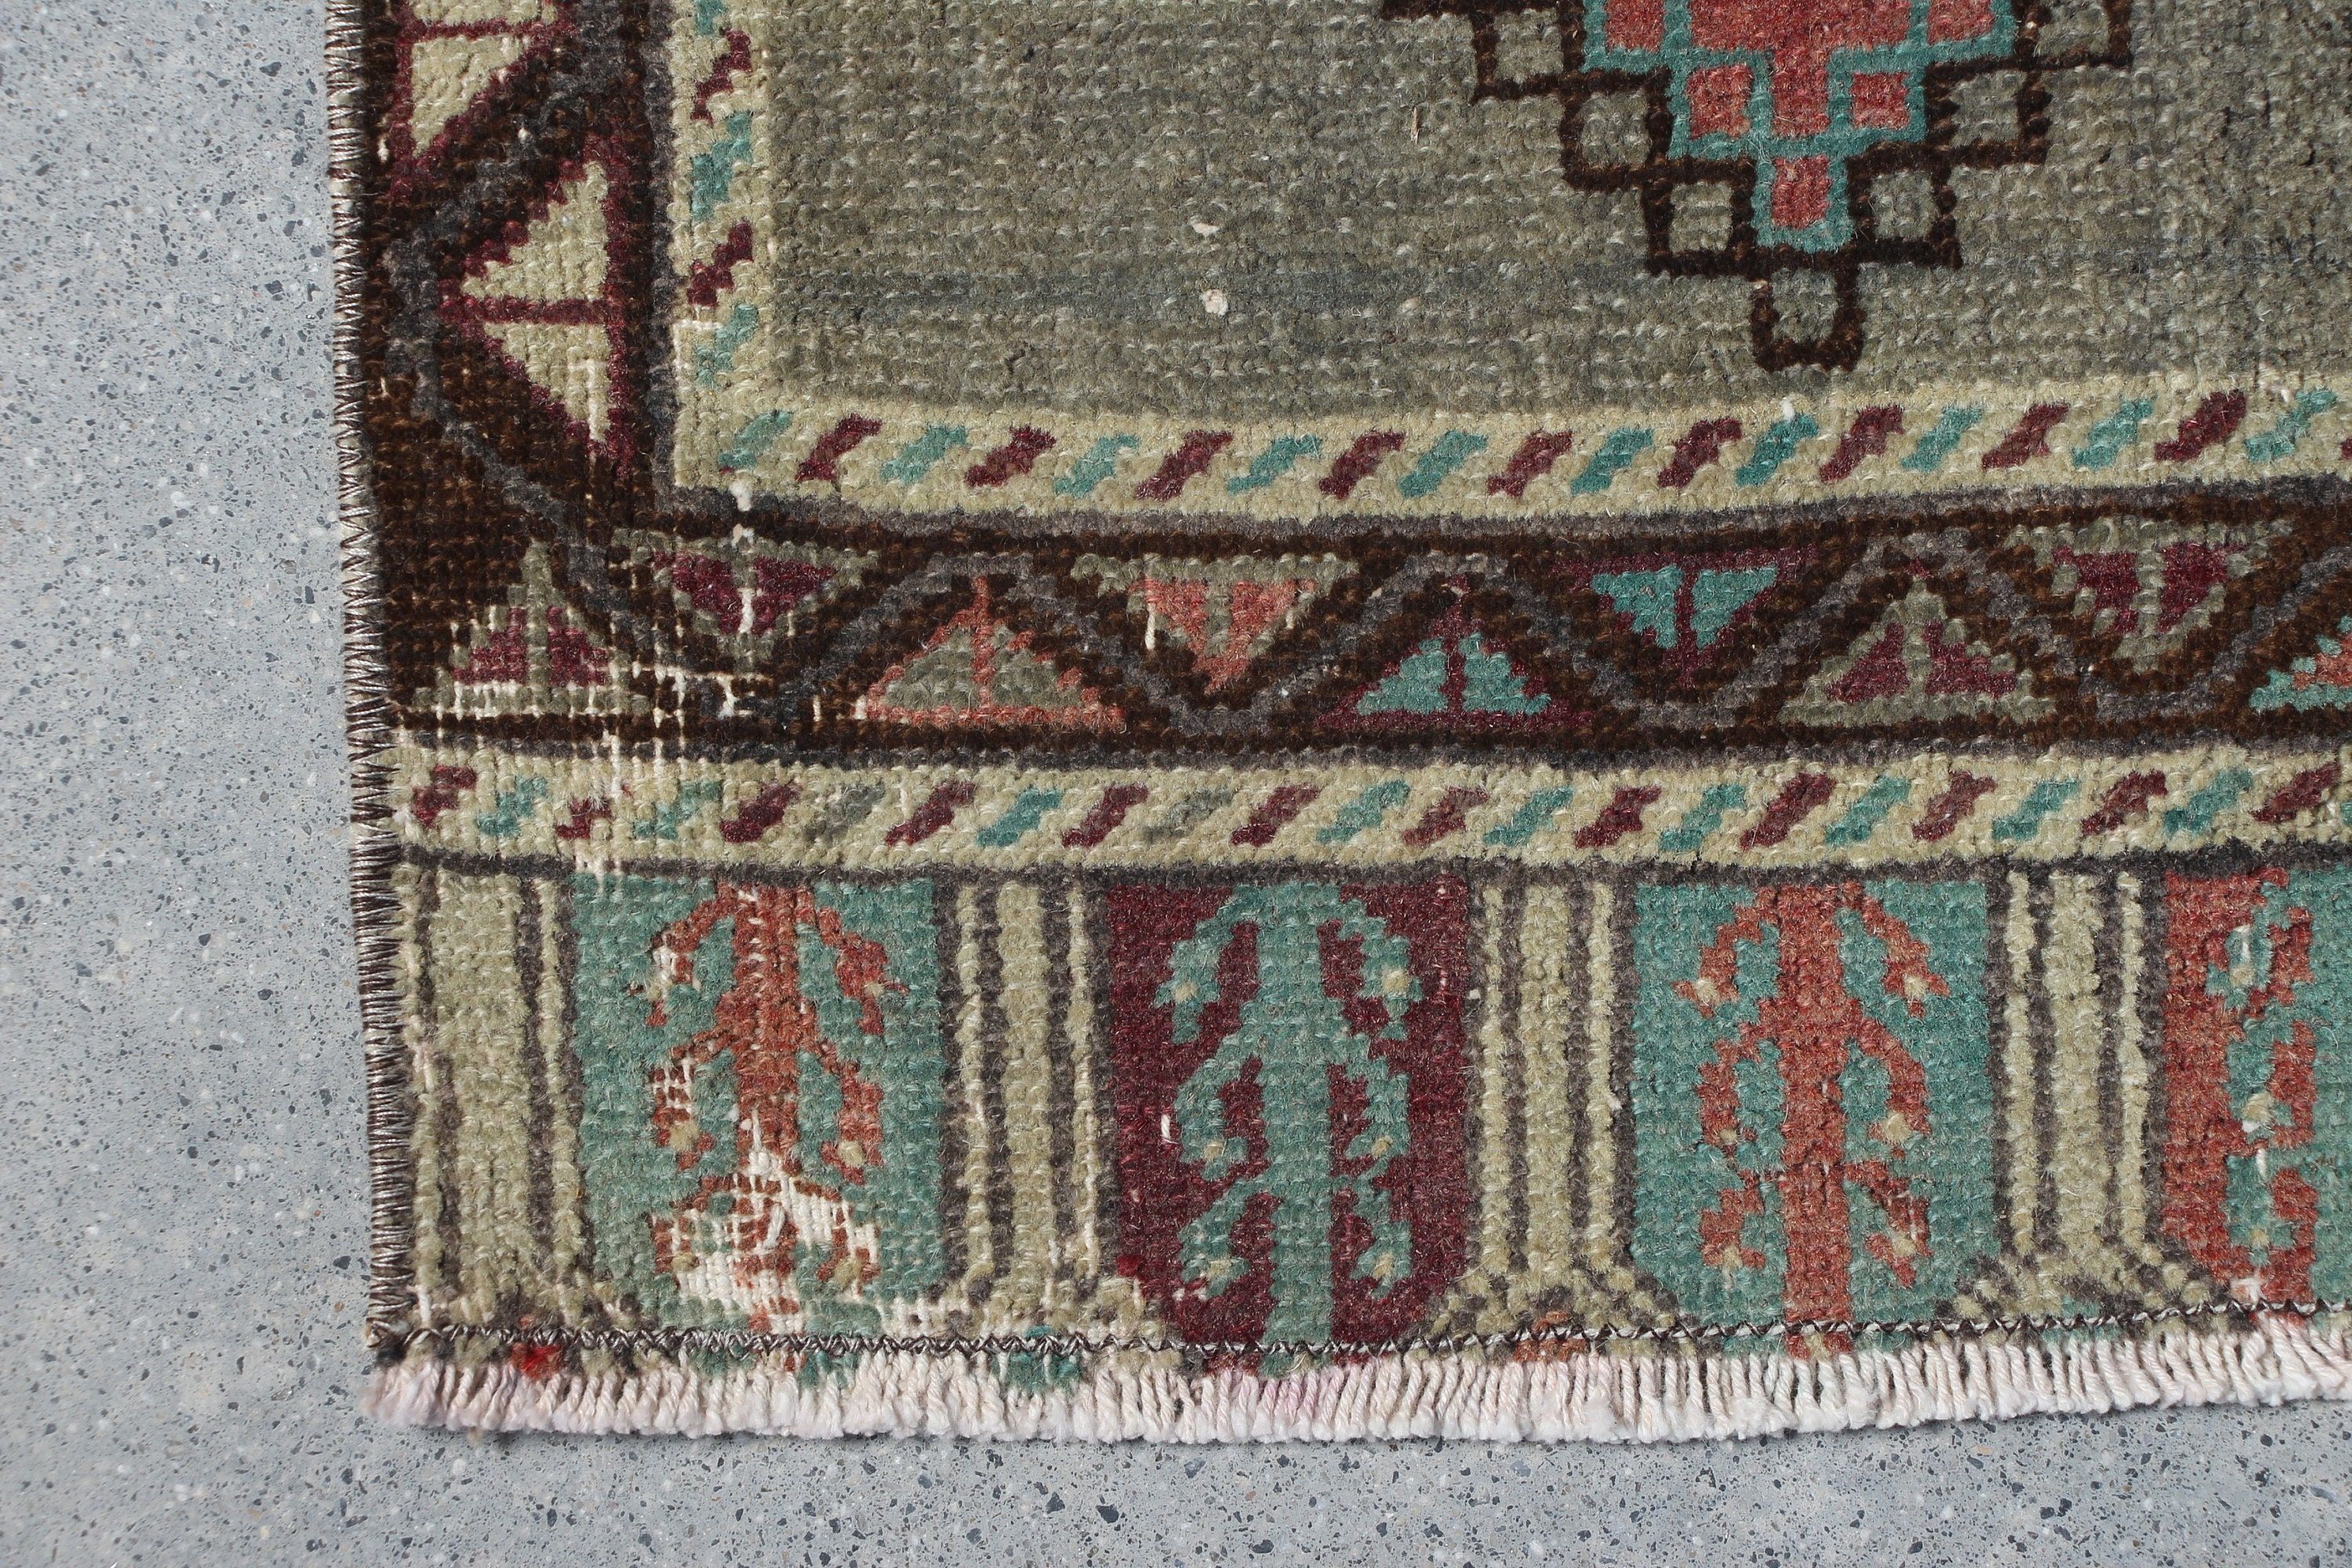 Anatolian Rug, Bright Rug, Kitchen Rug, Wall Hanging Rug, Vintage Rugs, 1.3x3.1 ft Small Rug, Turkish Rug, Bath Rug, Red Moroccan Rug